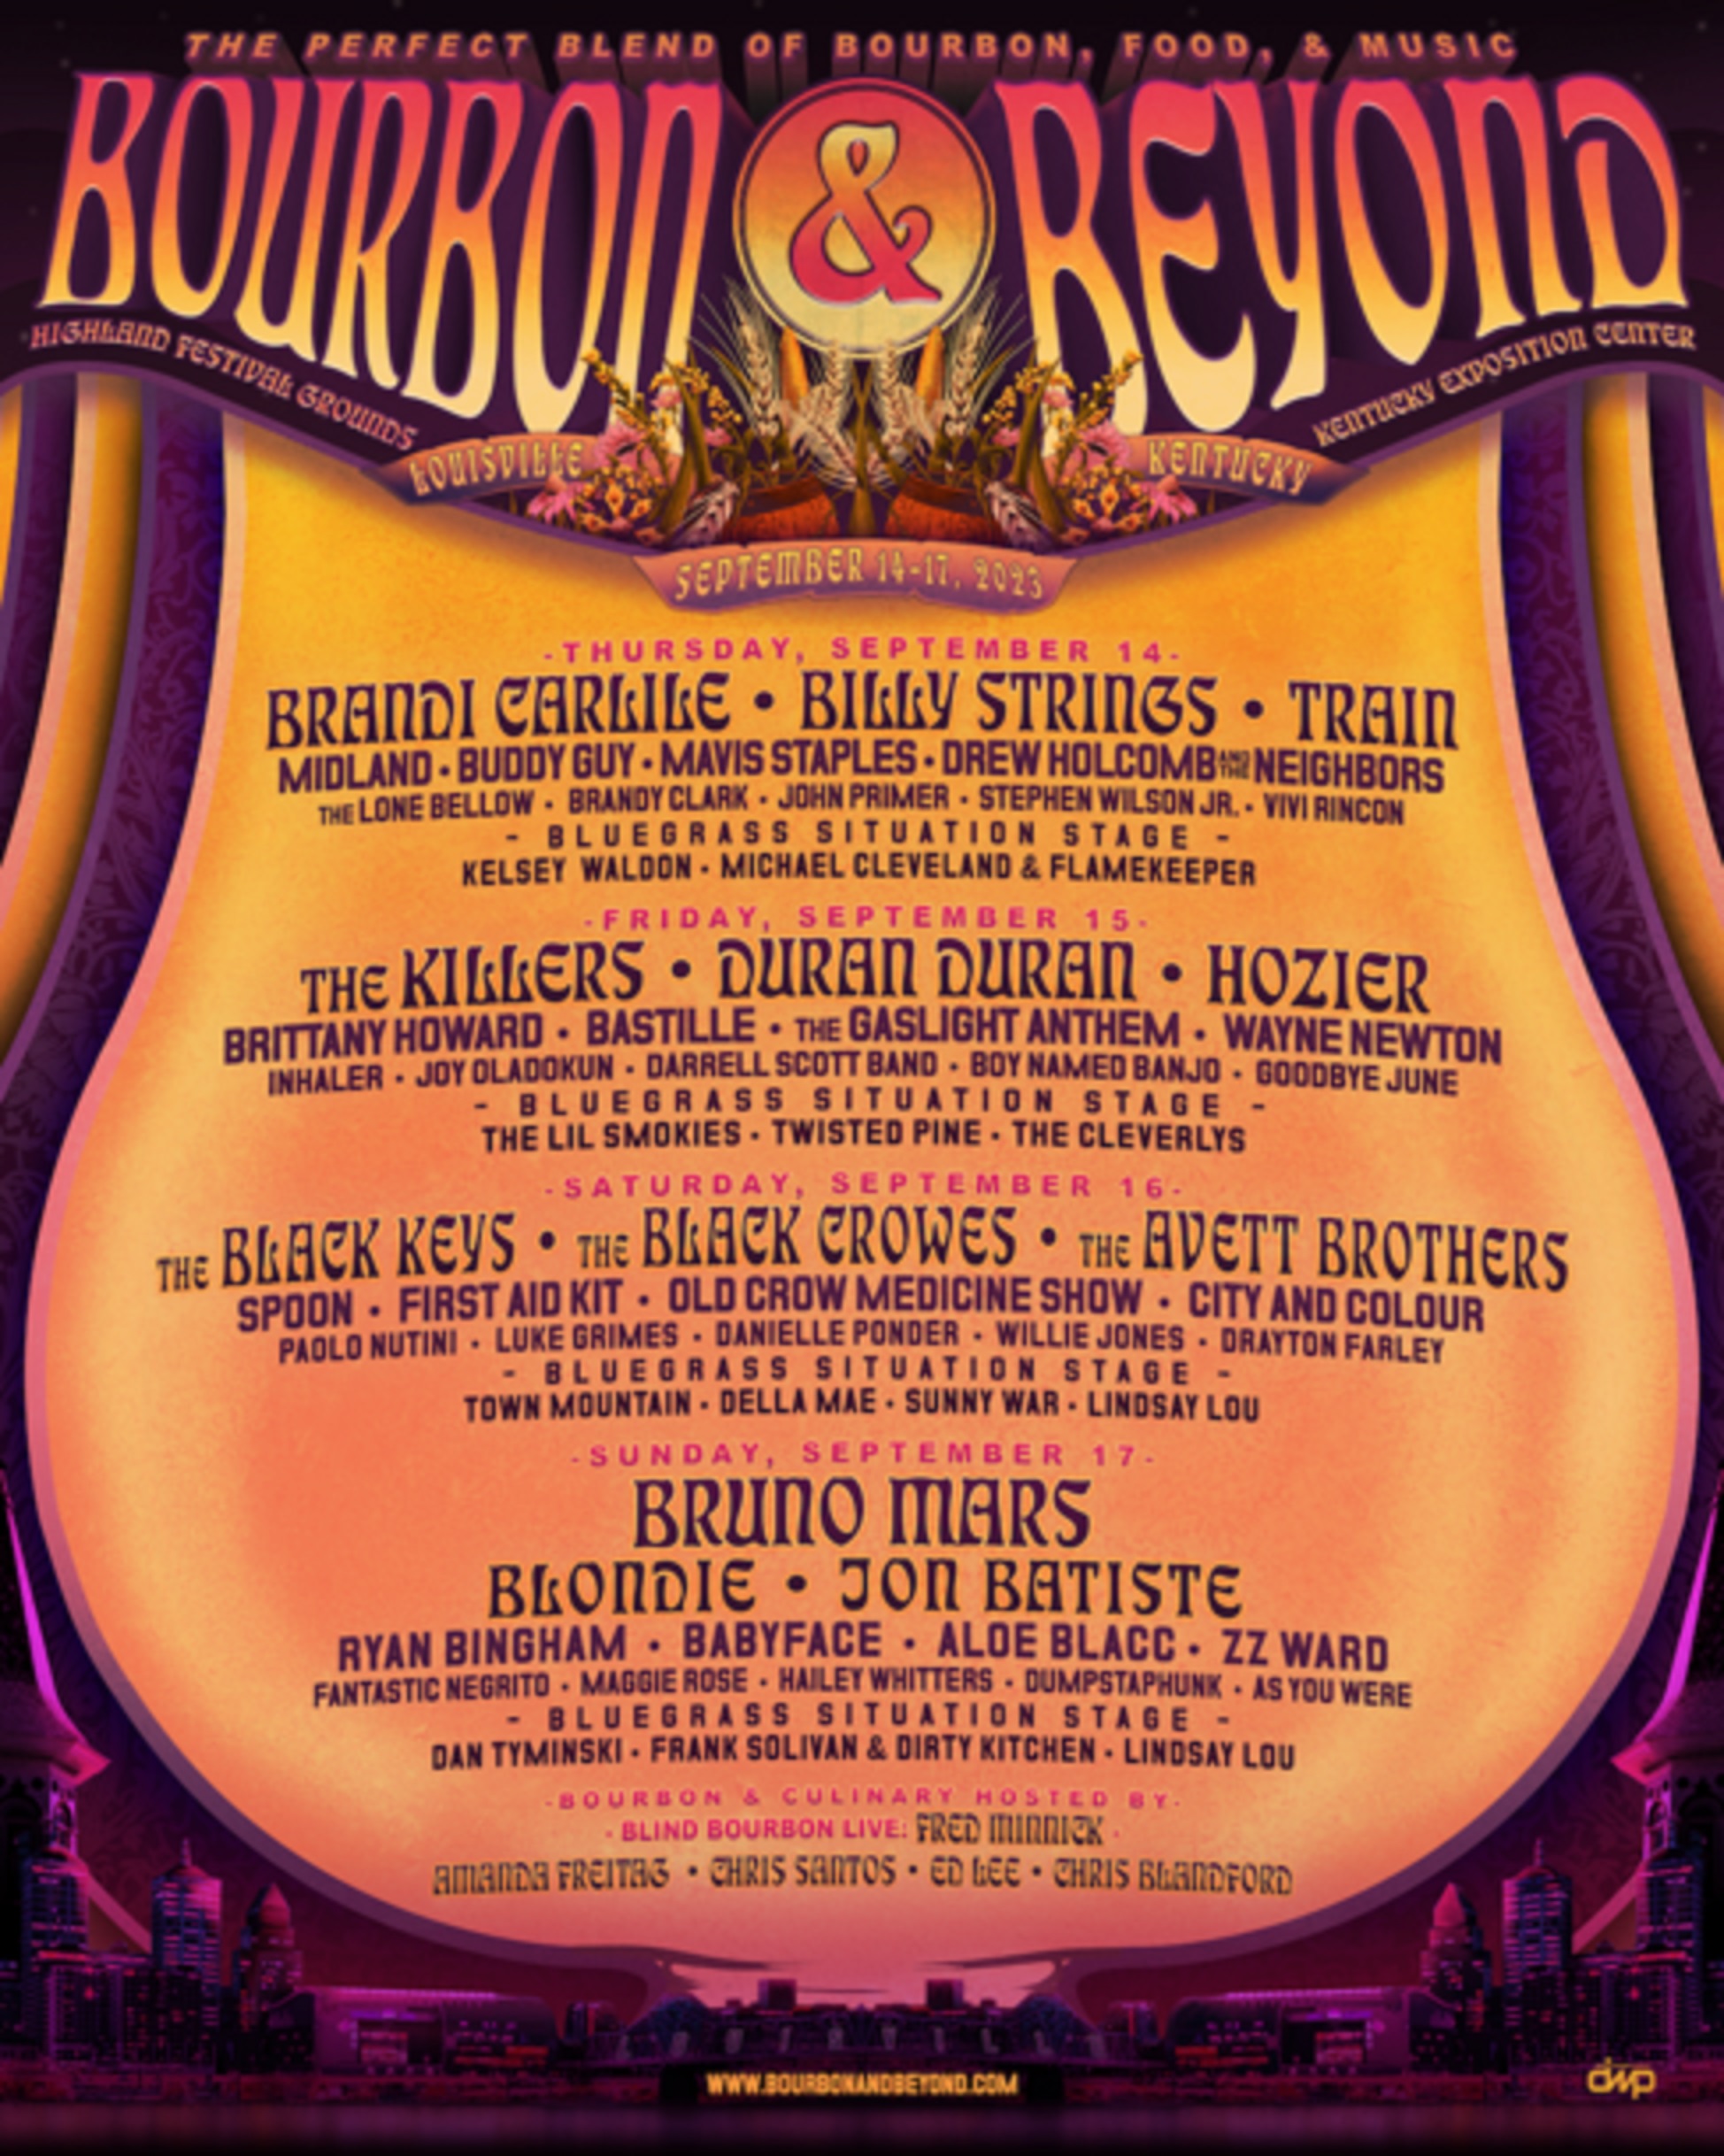 Bourbon & Beyond Returns with Billy Strings, Black Crowes, Brandi